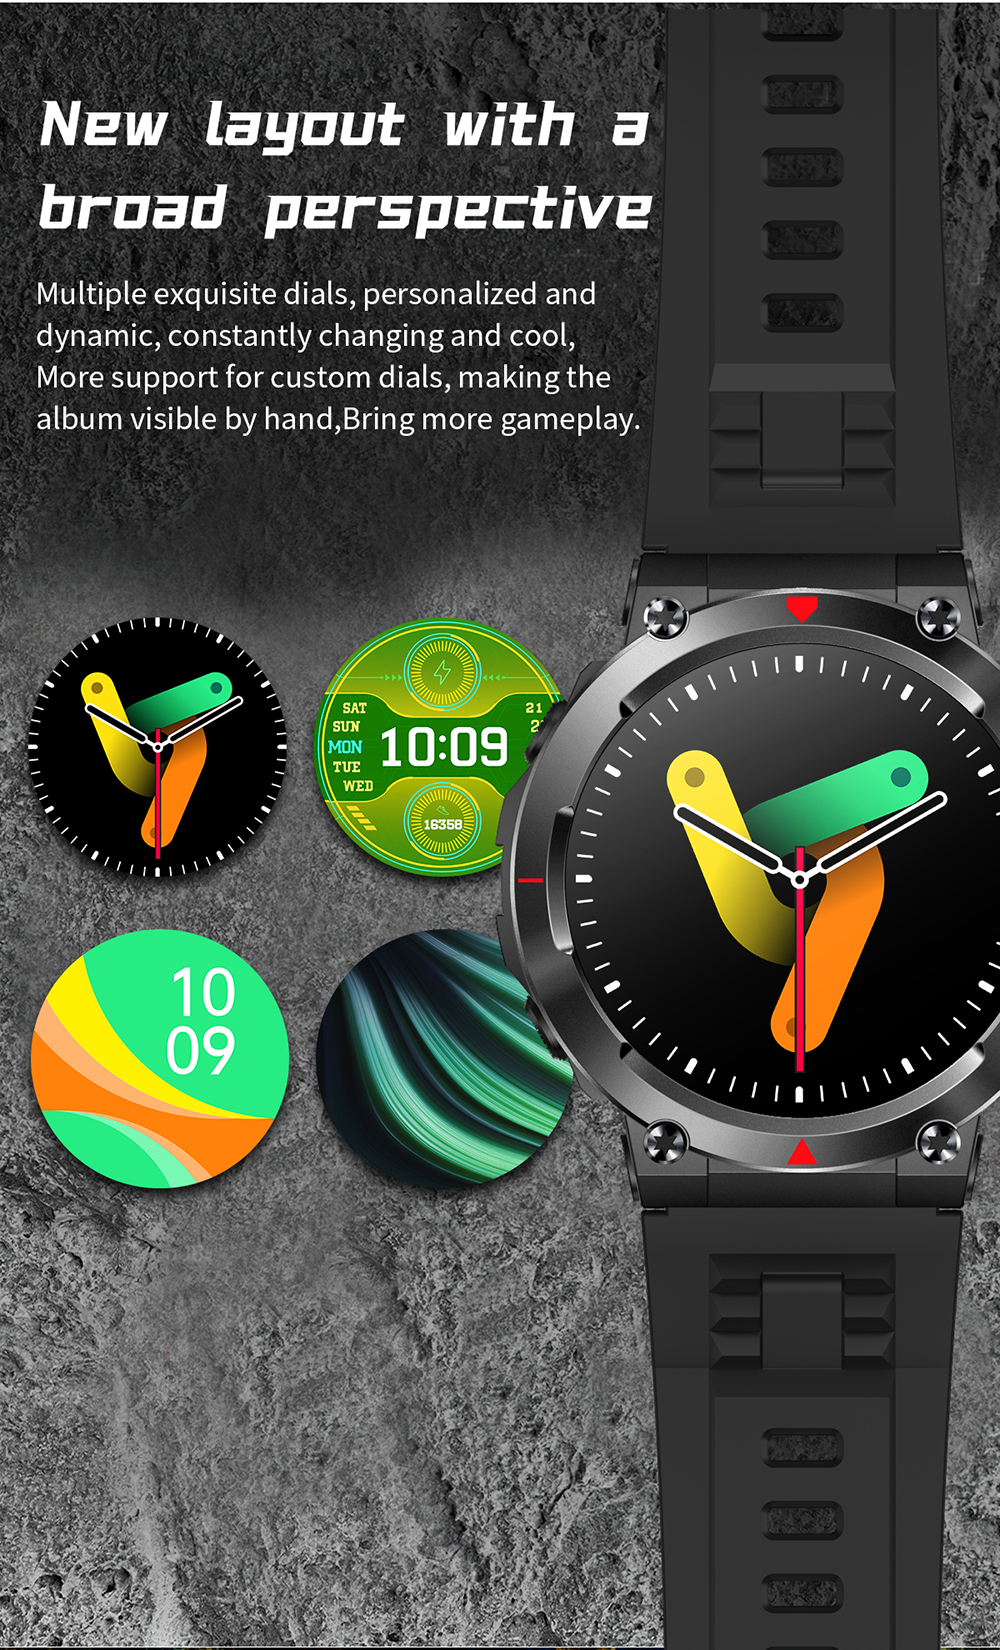 COLMI V70 Smartwatch 1.43" AMOLED Display Bluetooth Call Fitness Smart Watch